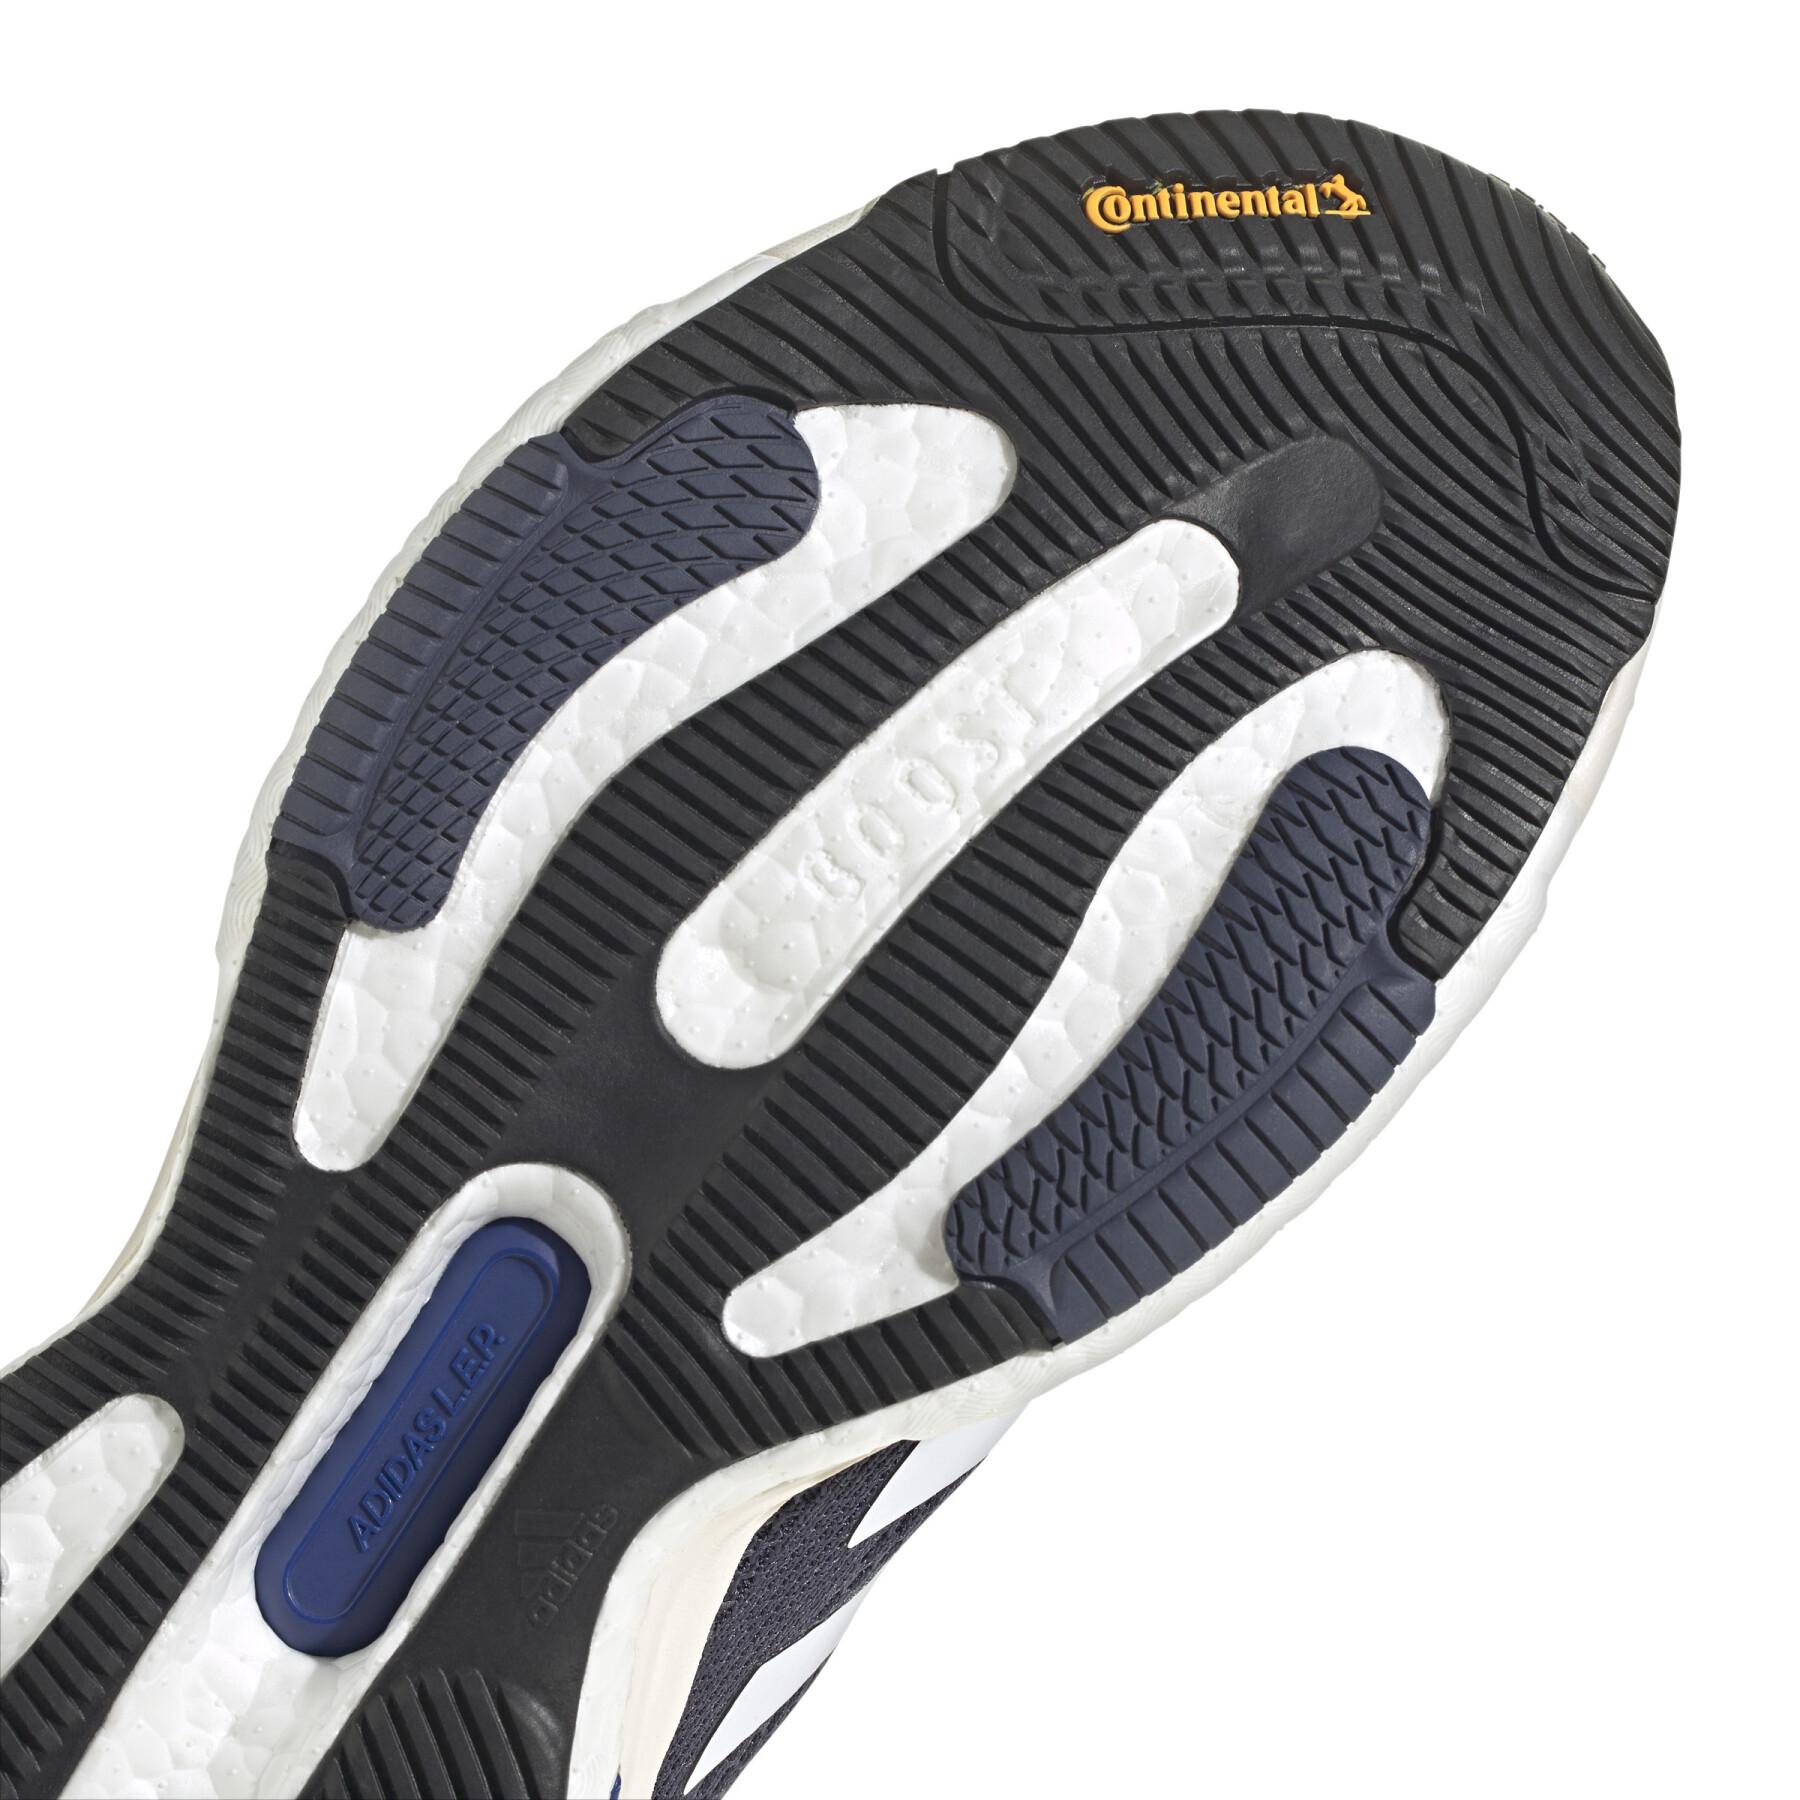 Schoenen van Running adidas Solarglide 6